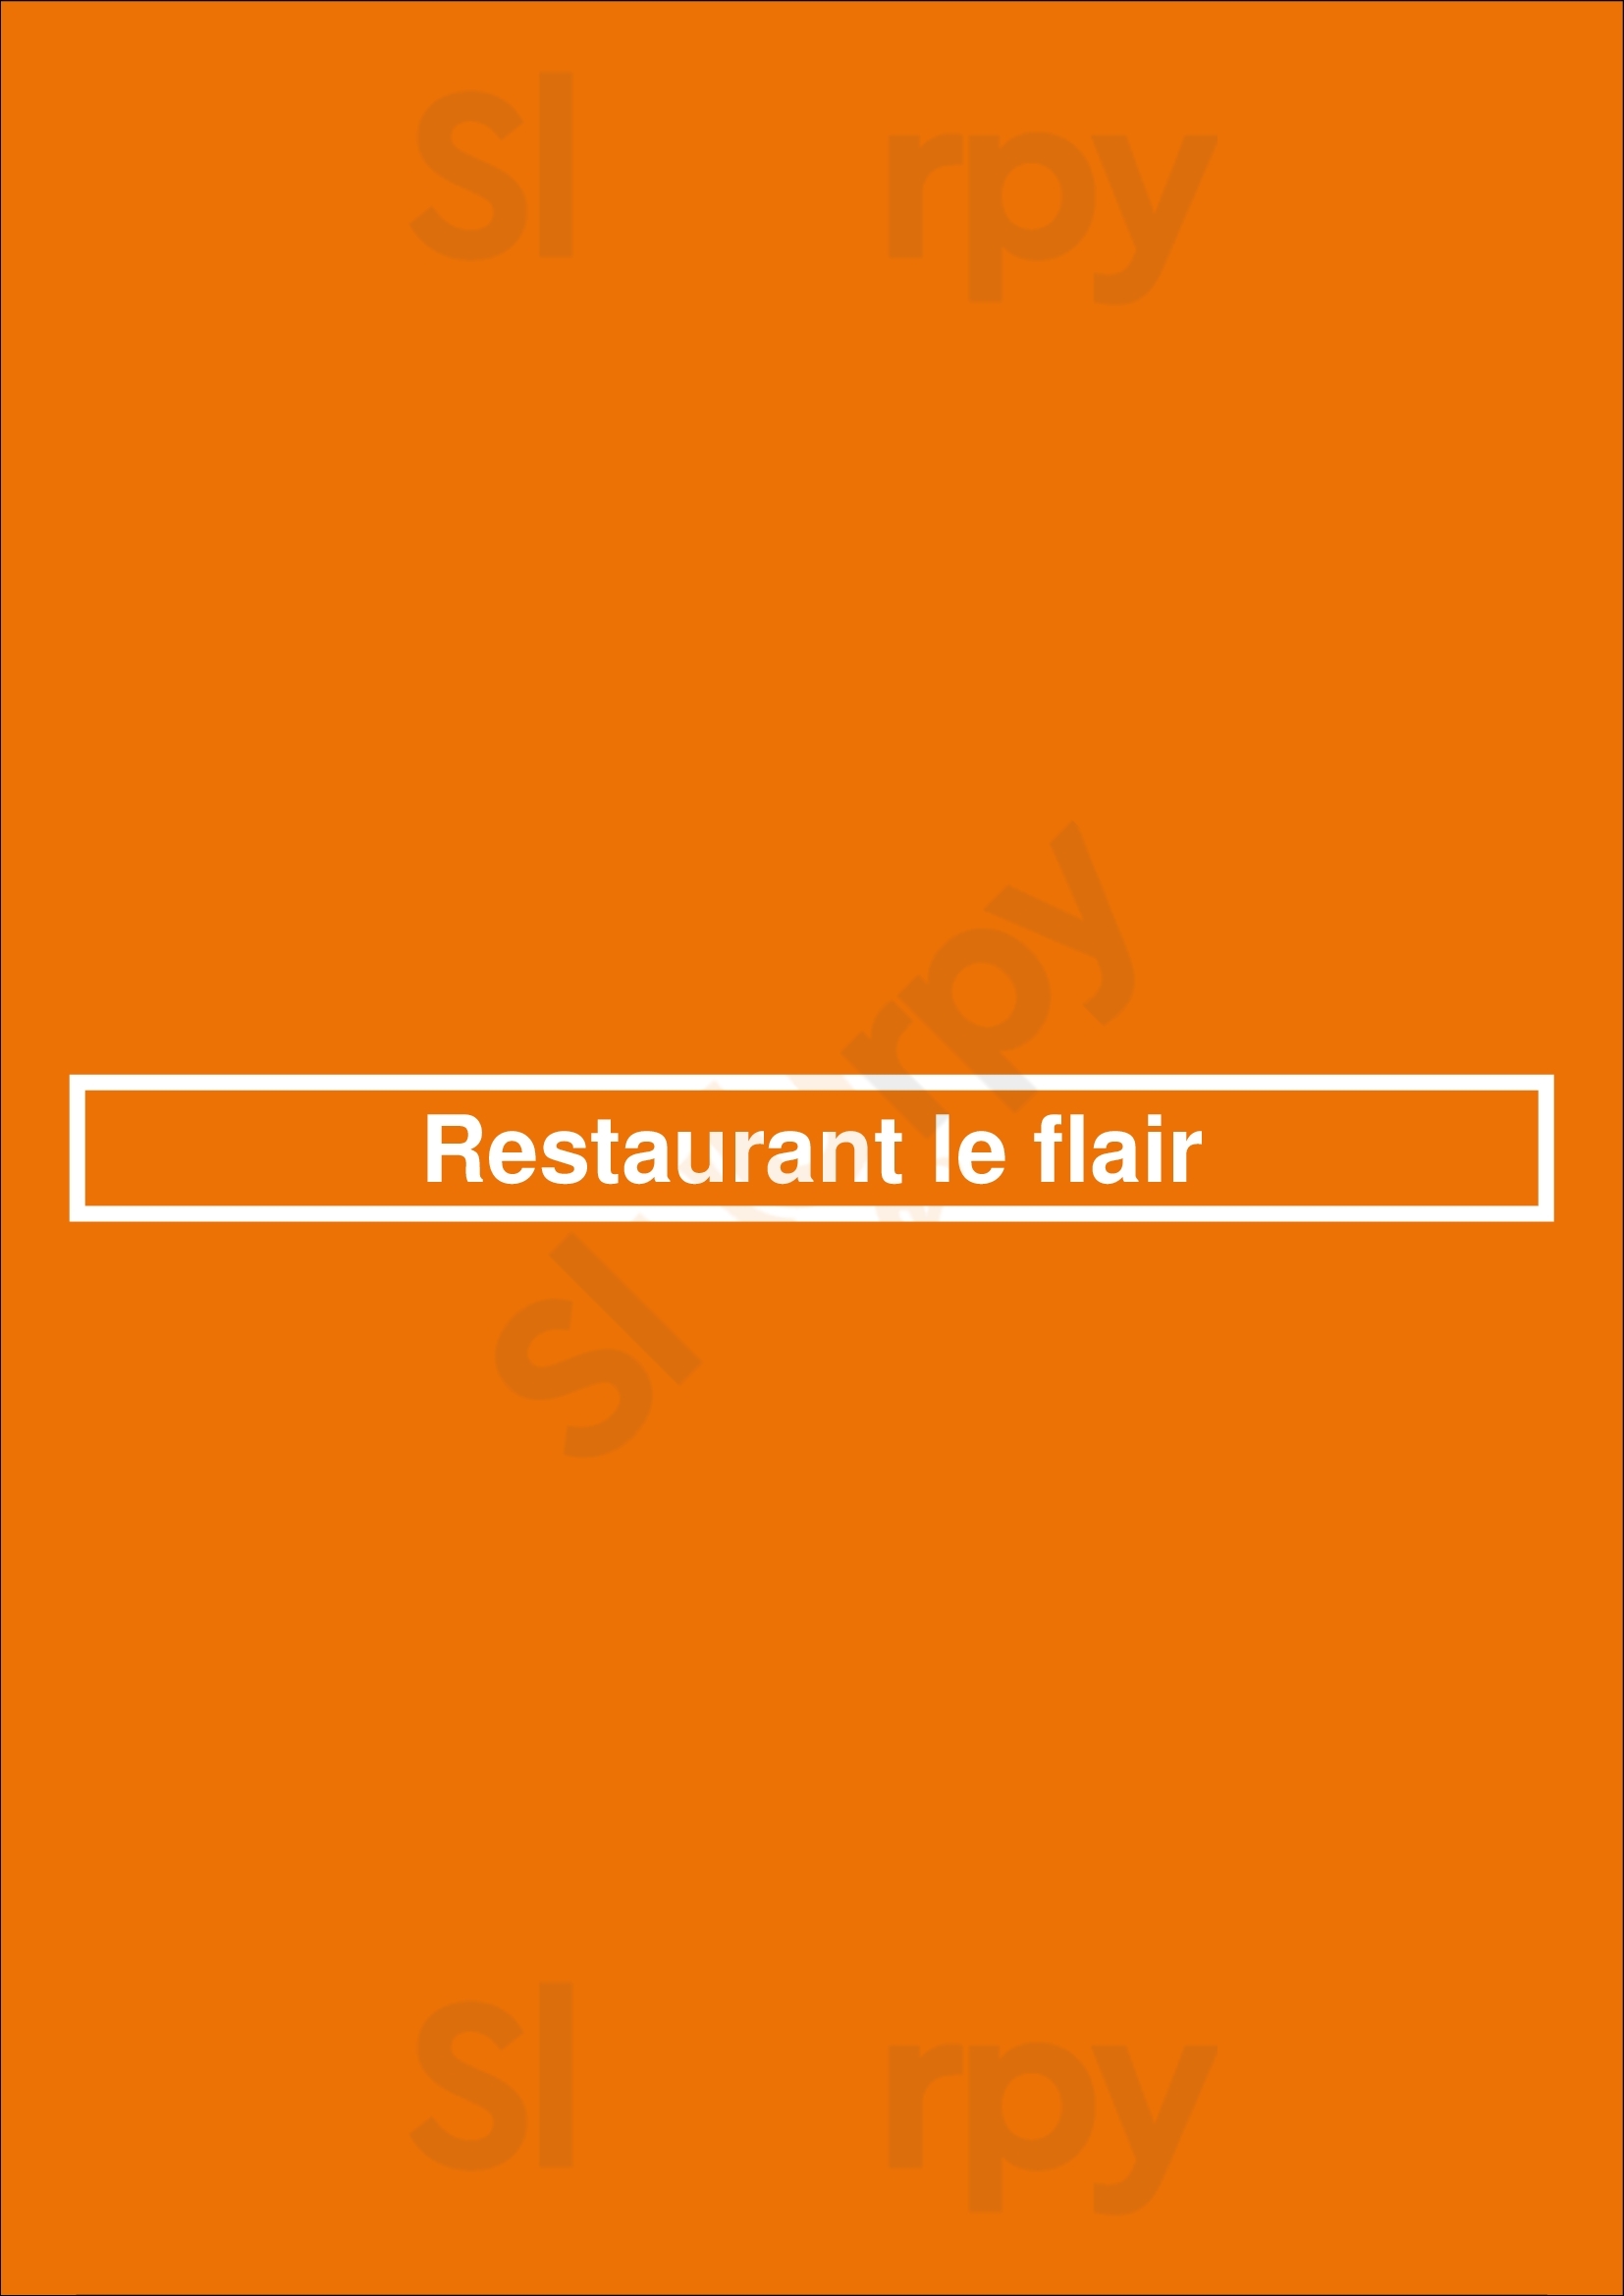 Restaurant Le Flair Düsseldorf Menu - 1